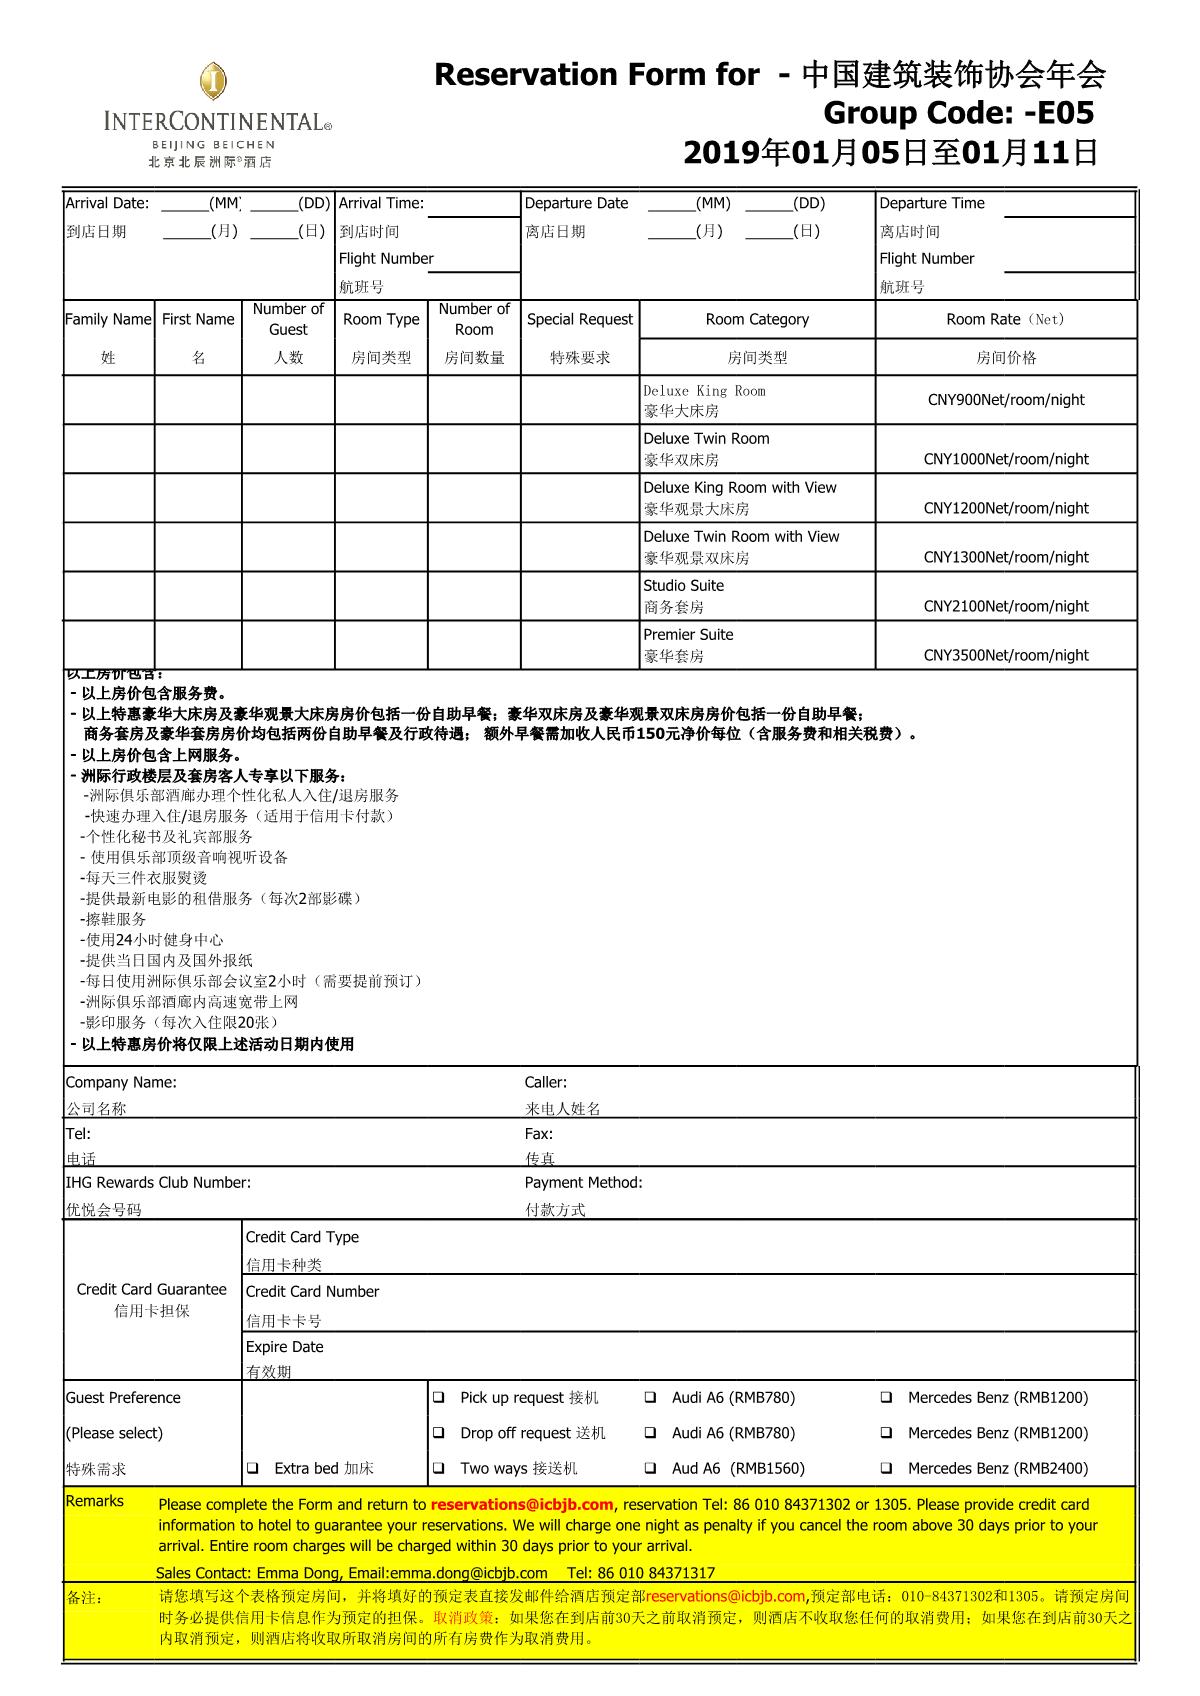 Reservation+Form-+中国建筑装饰协会年会_1.jpg